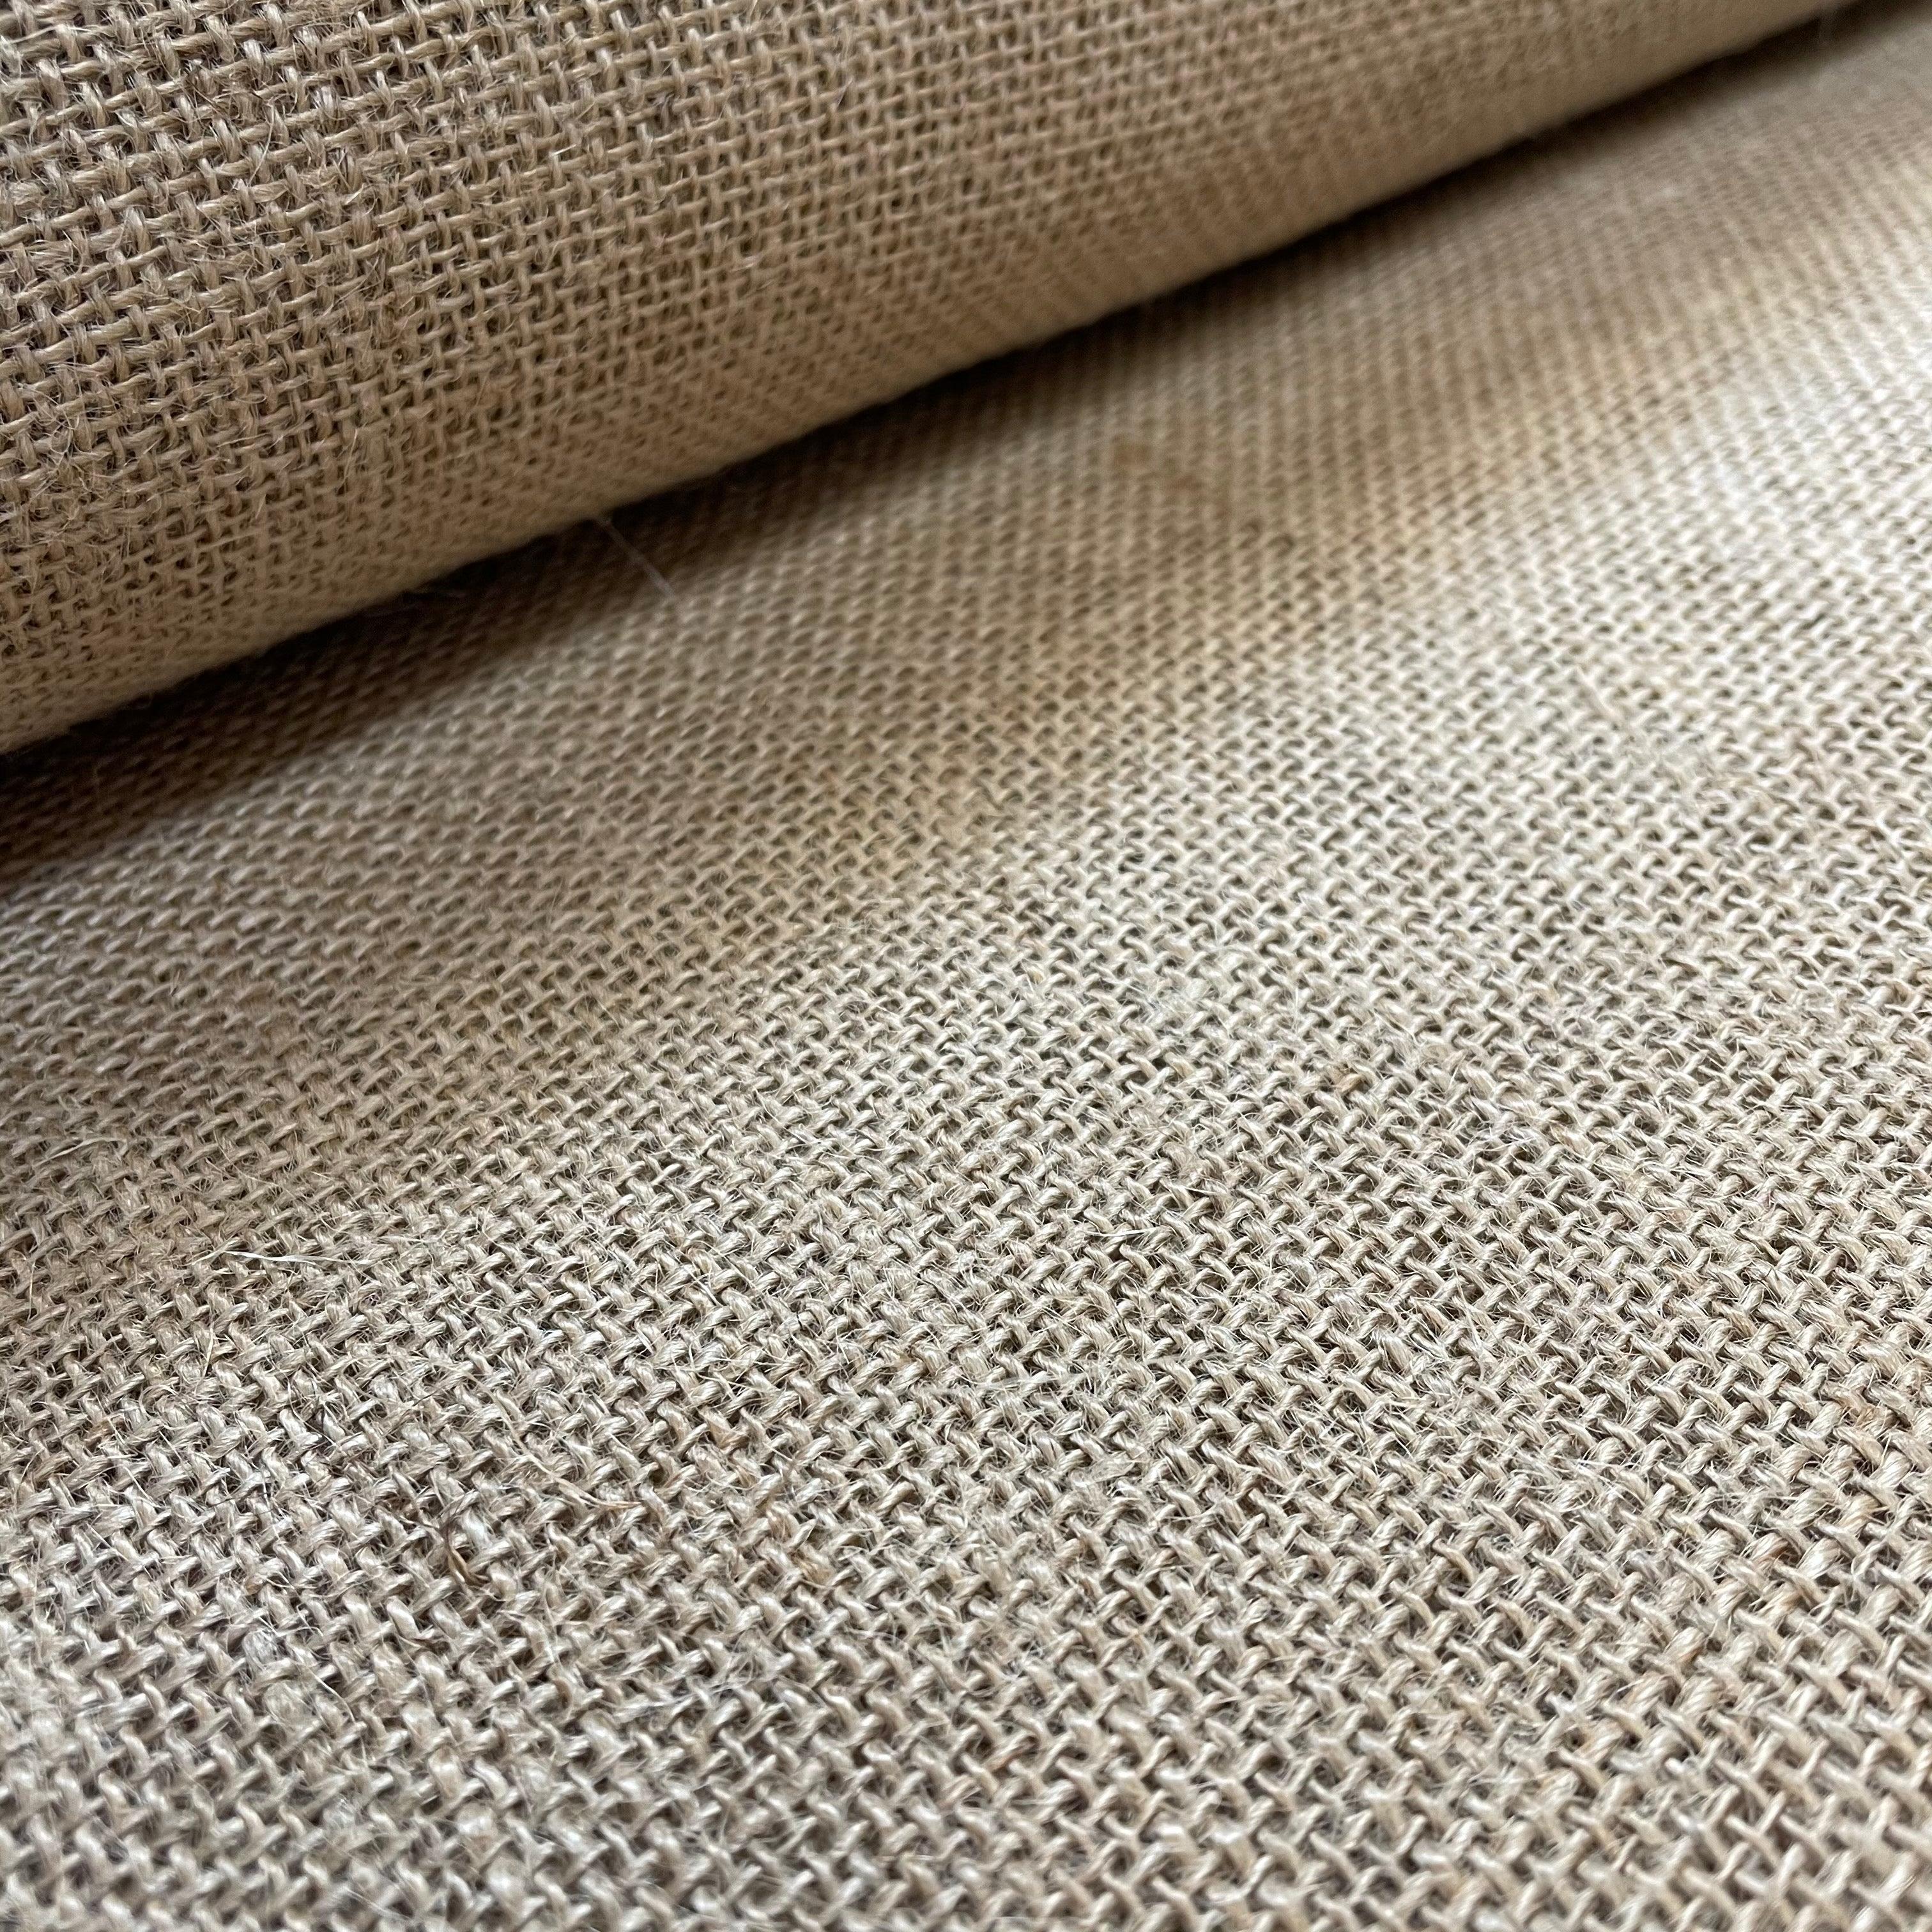 Hessian fabric